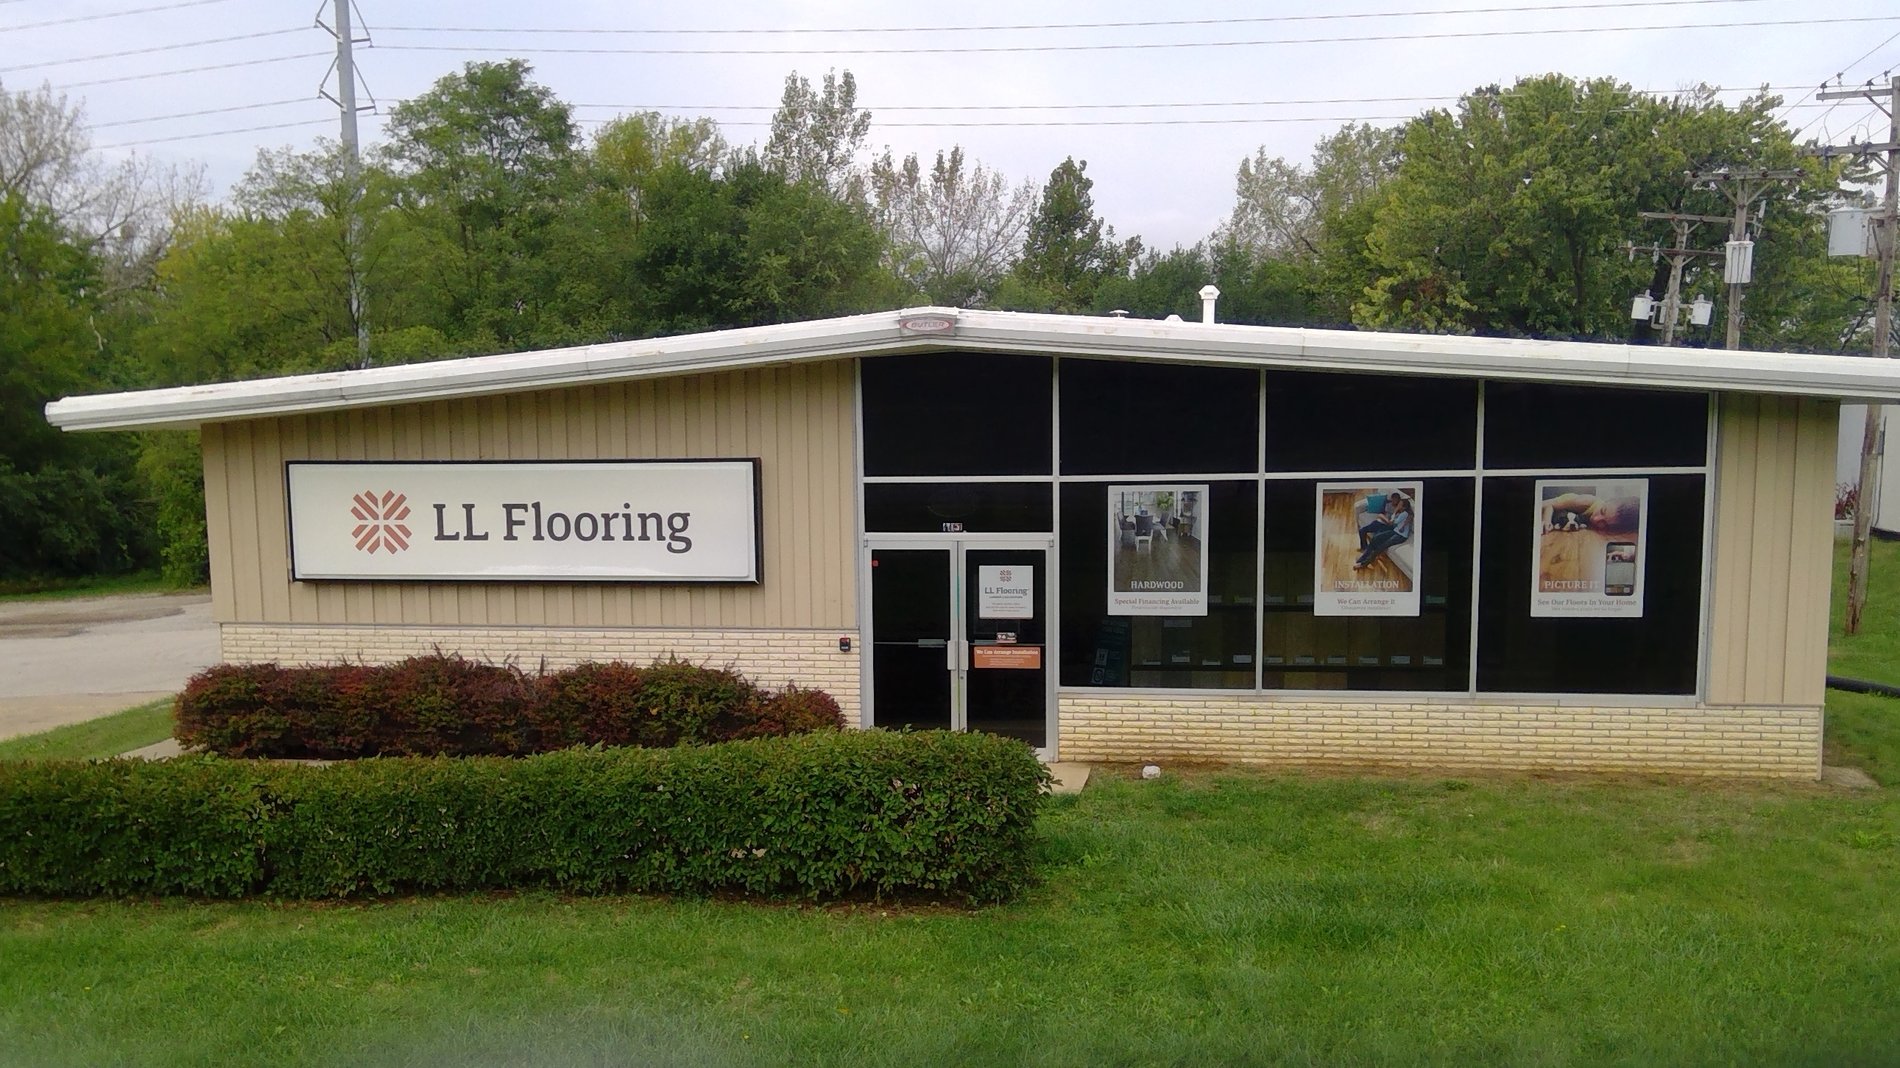 LL Flooring #1126 East Peoria | 1467 N. Main Street | Storefront